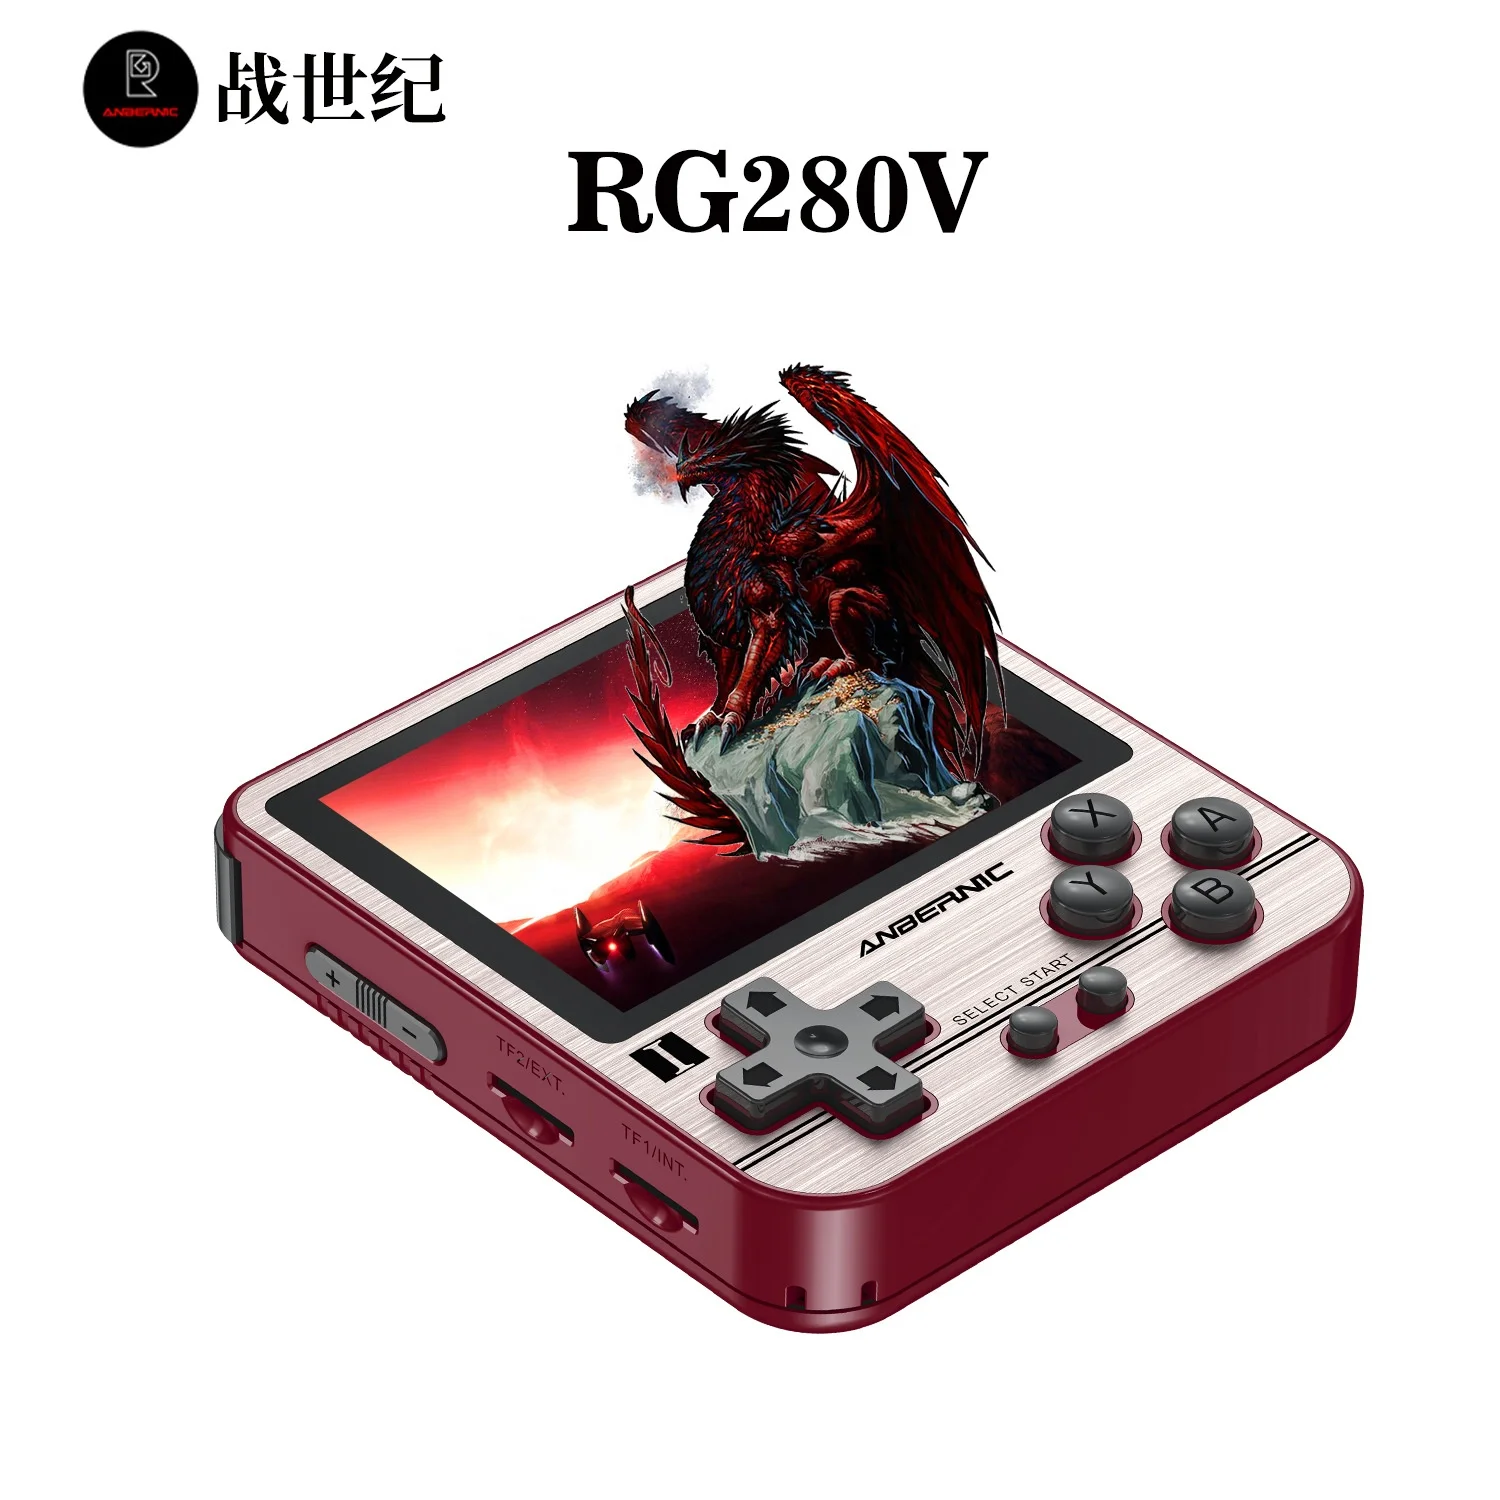 anbernic rg280v retro gaming devices handheld| Alibaba.com